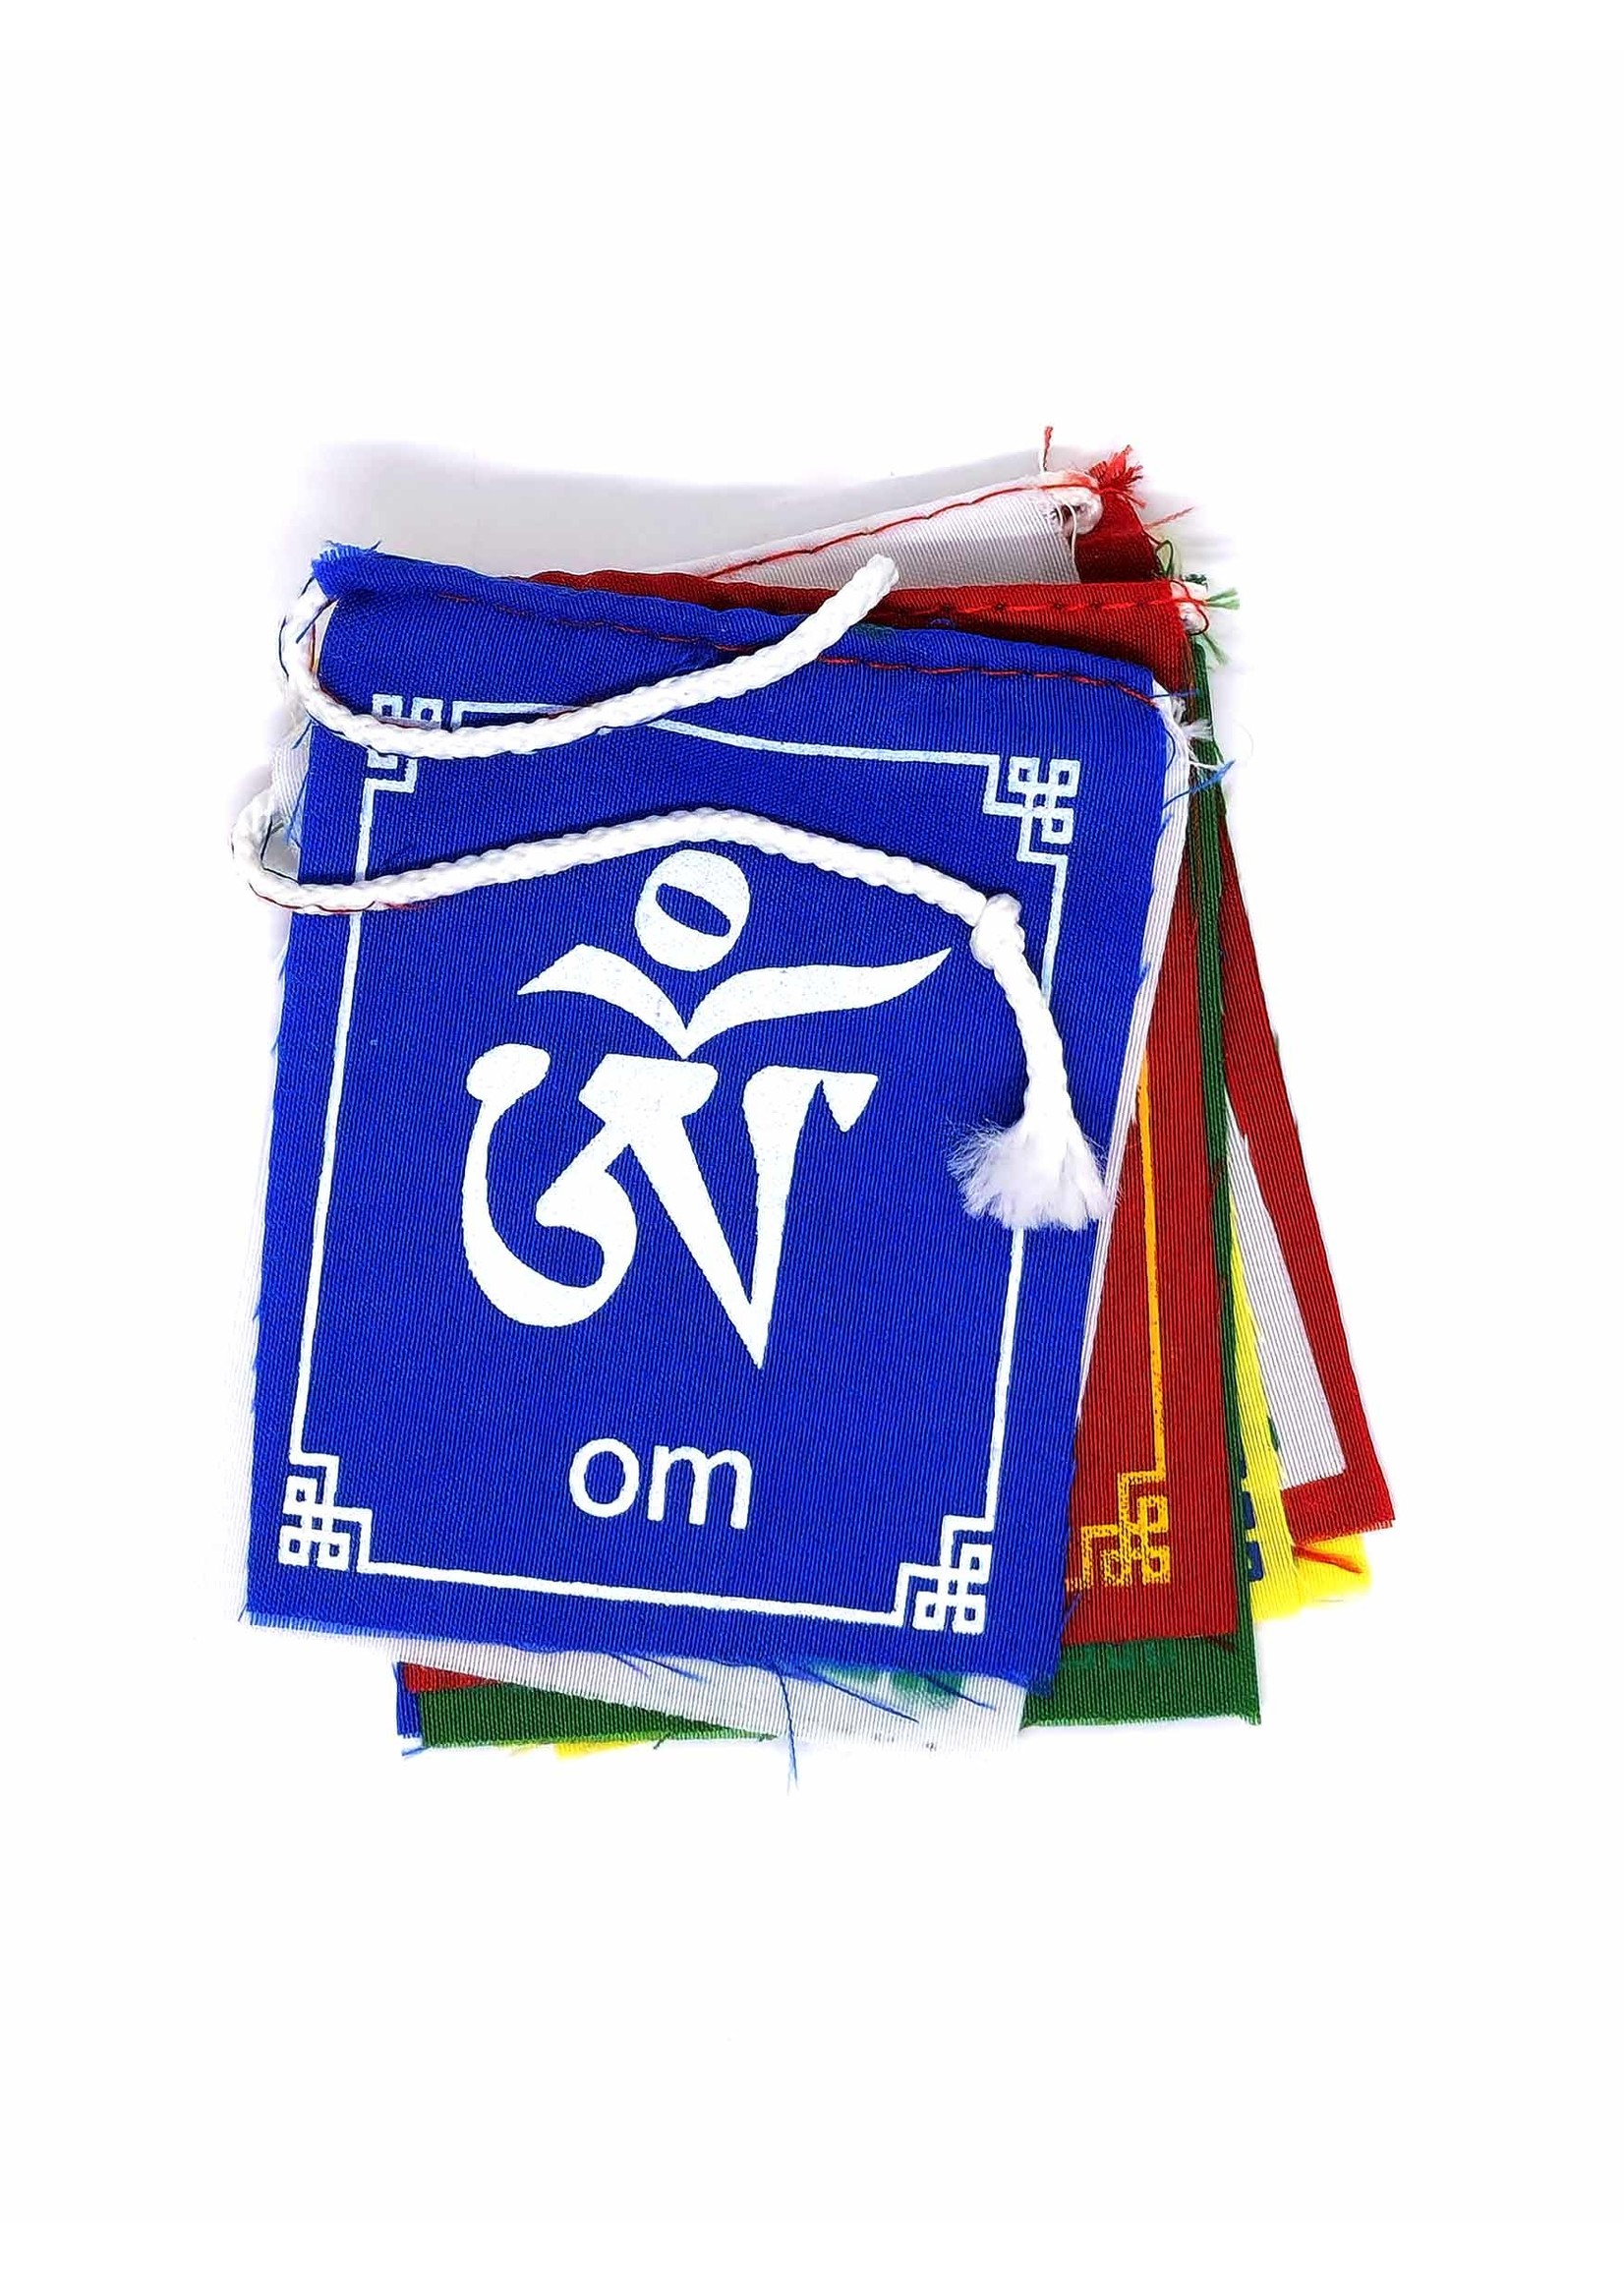 Bandiera tibetana "Om Mani Padme Hum", Mini, 6,5 x 7,5 cm, 65 cm